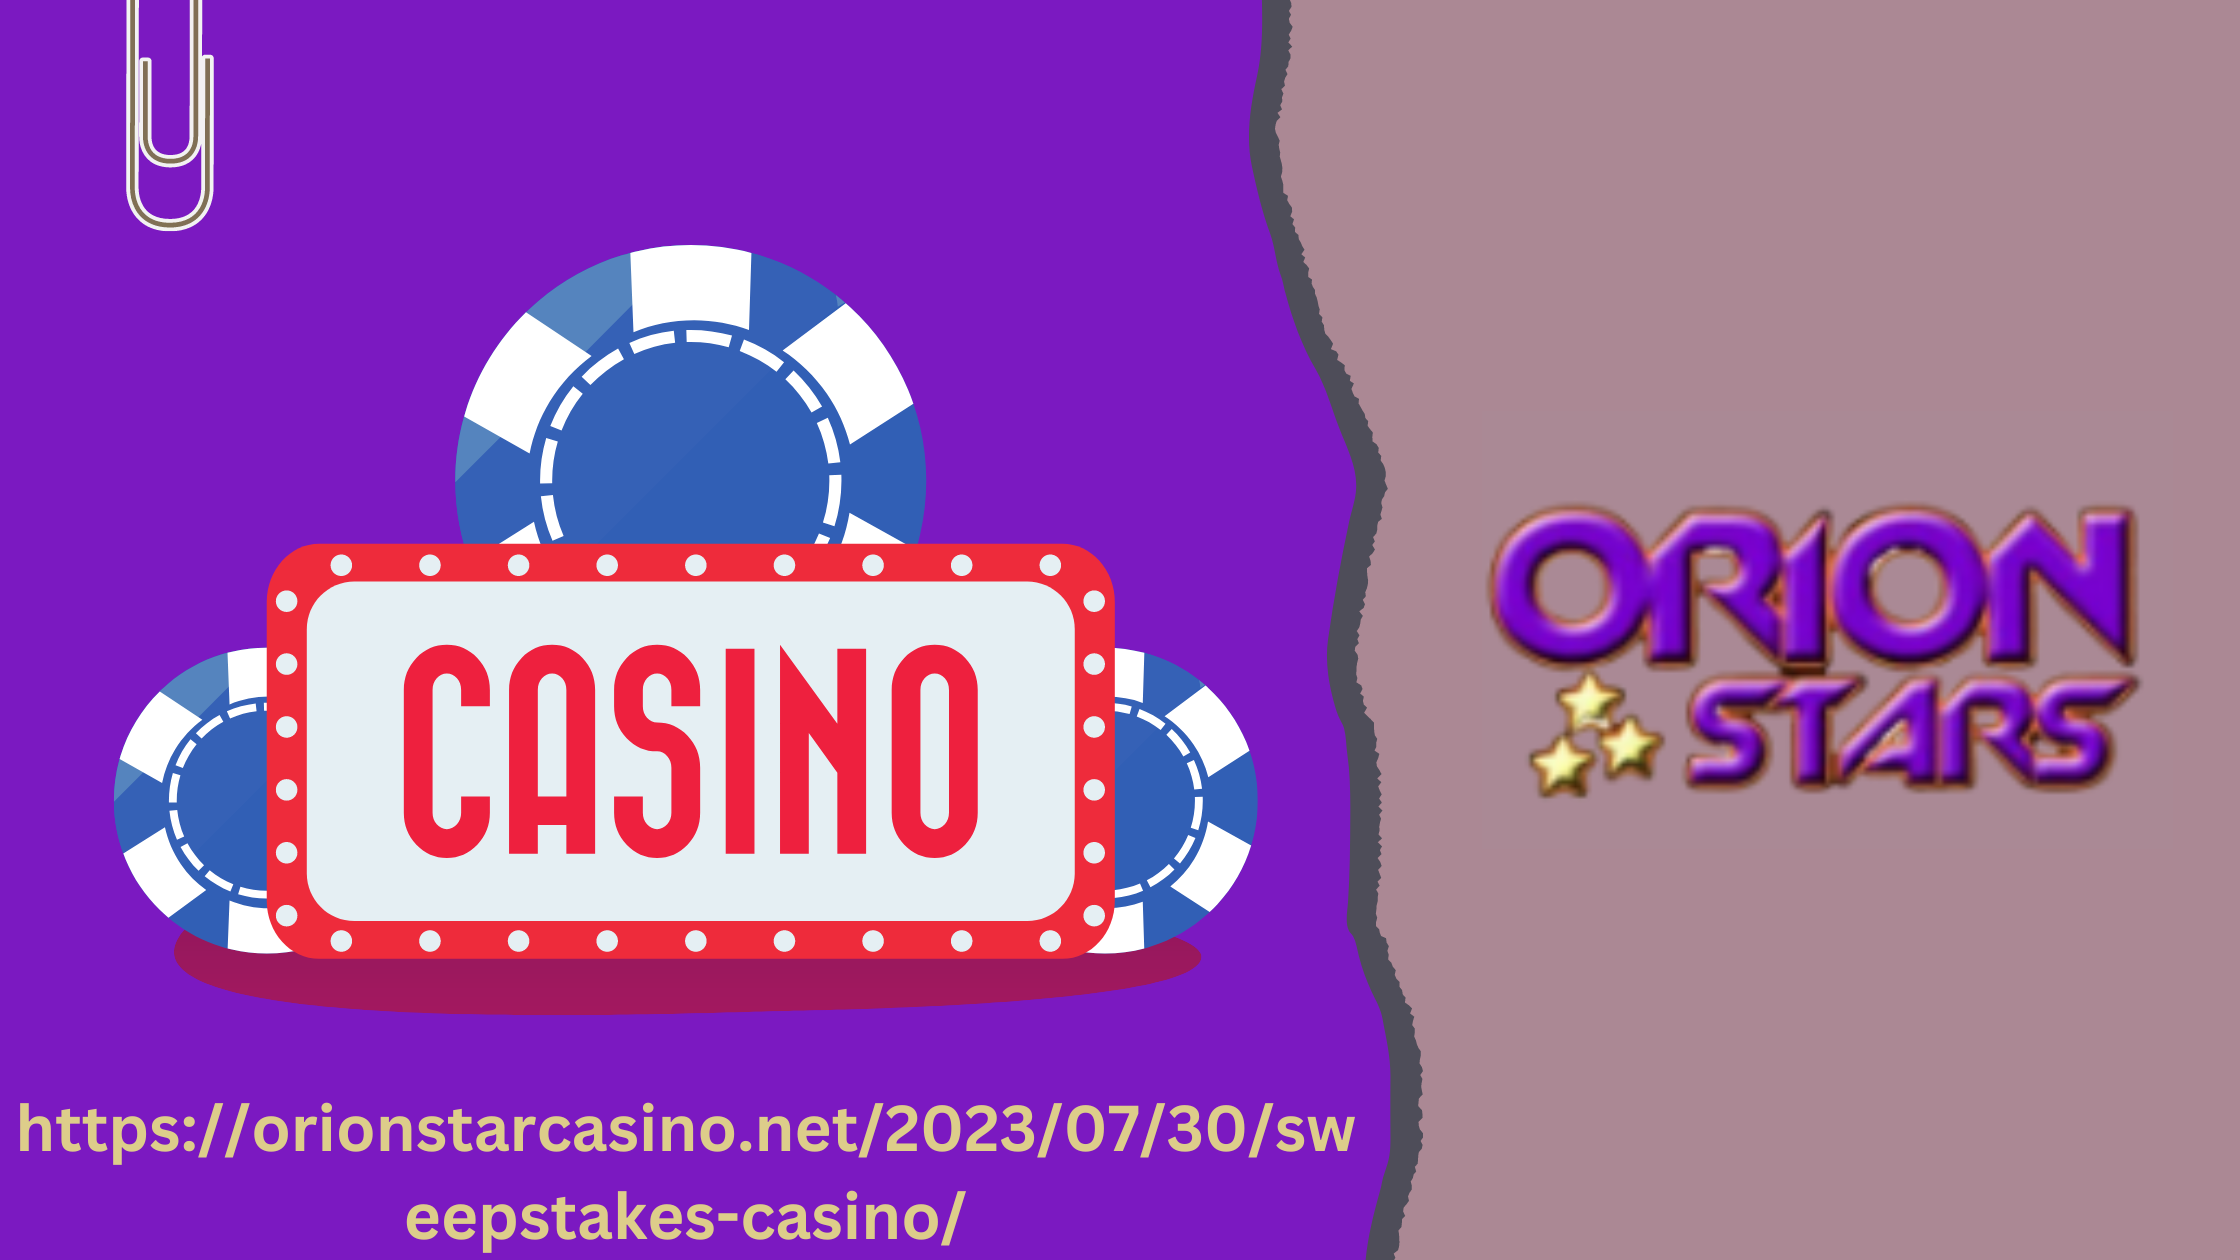 sweepstakes casino